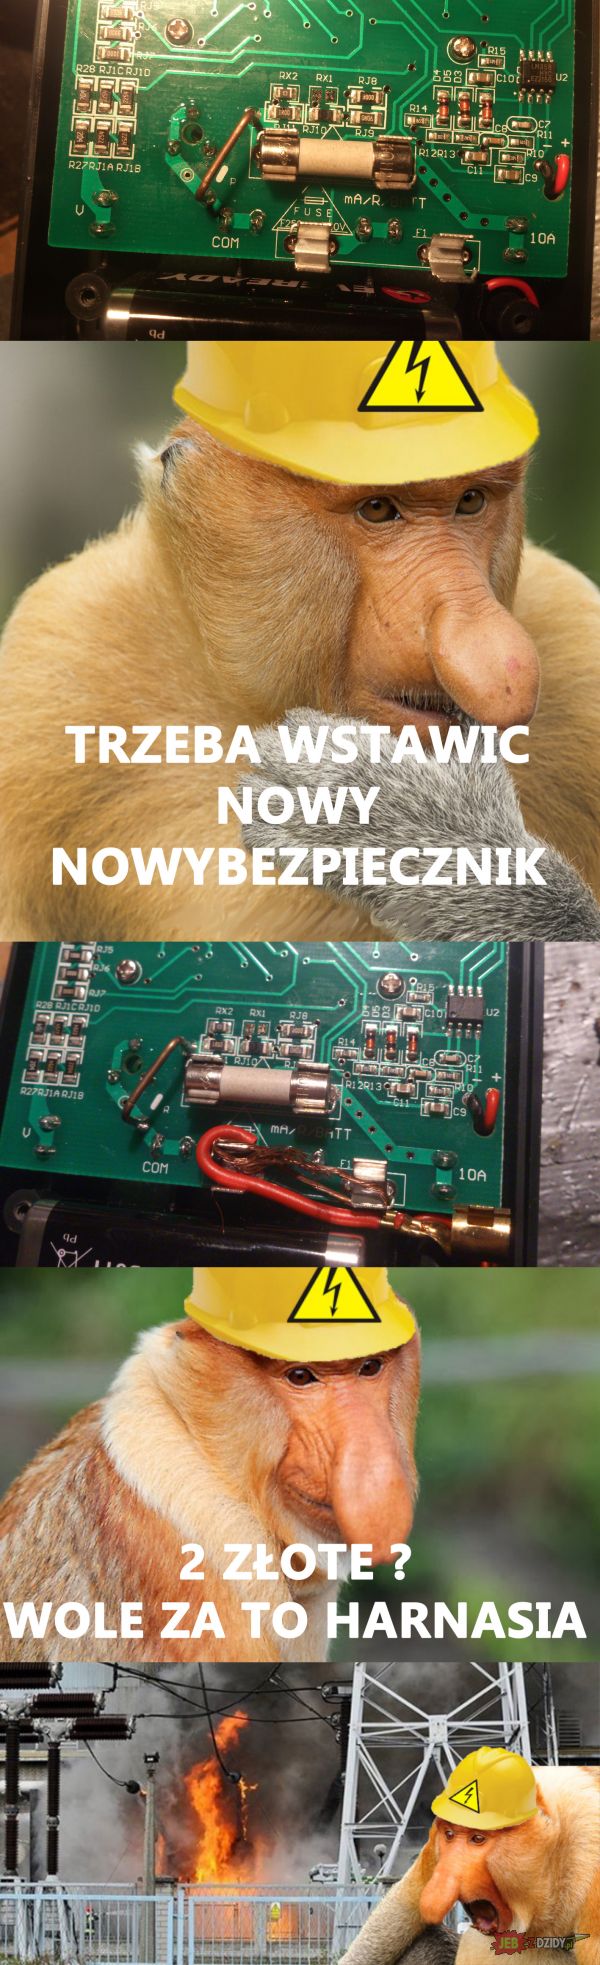 Janusz elektryk